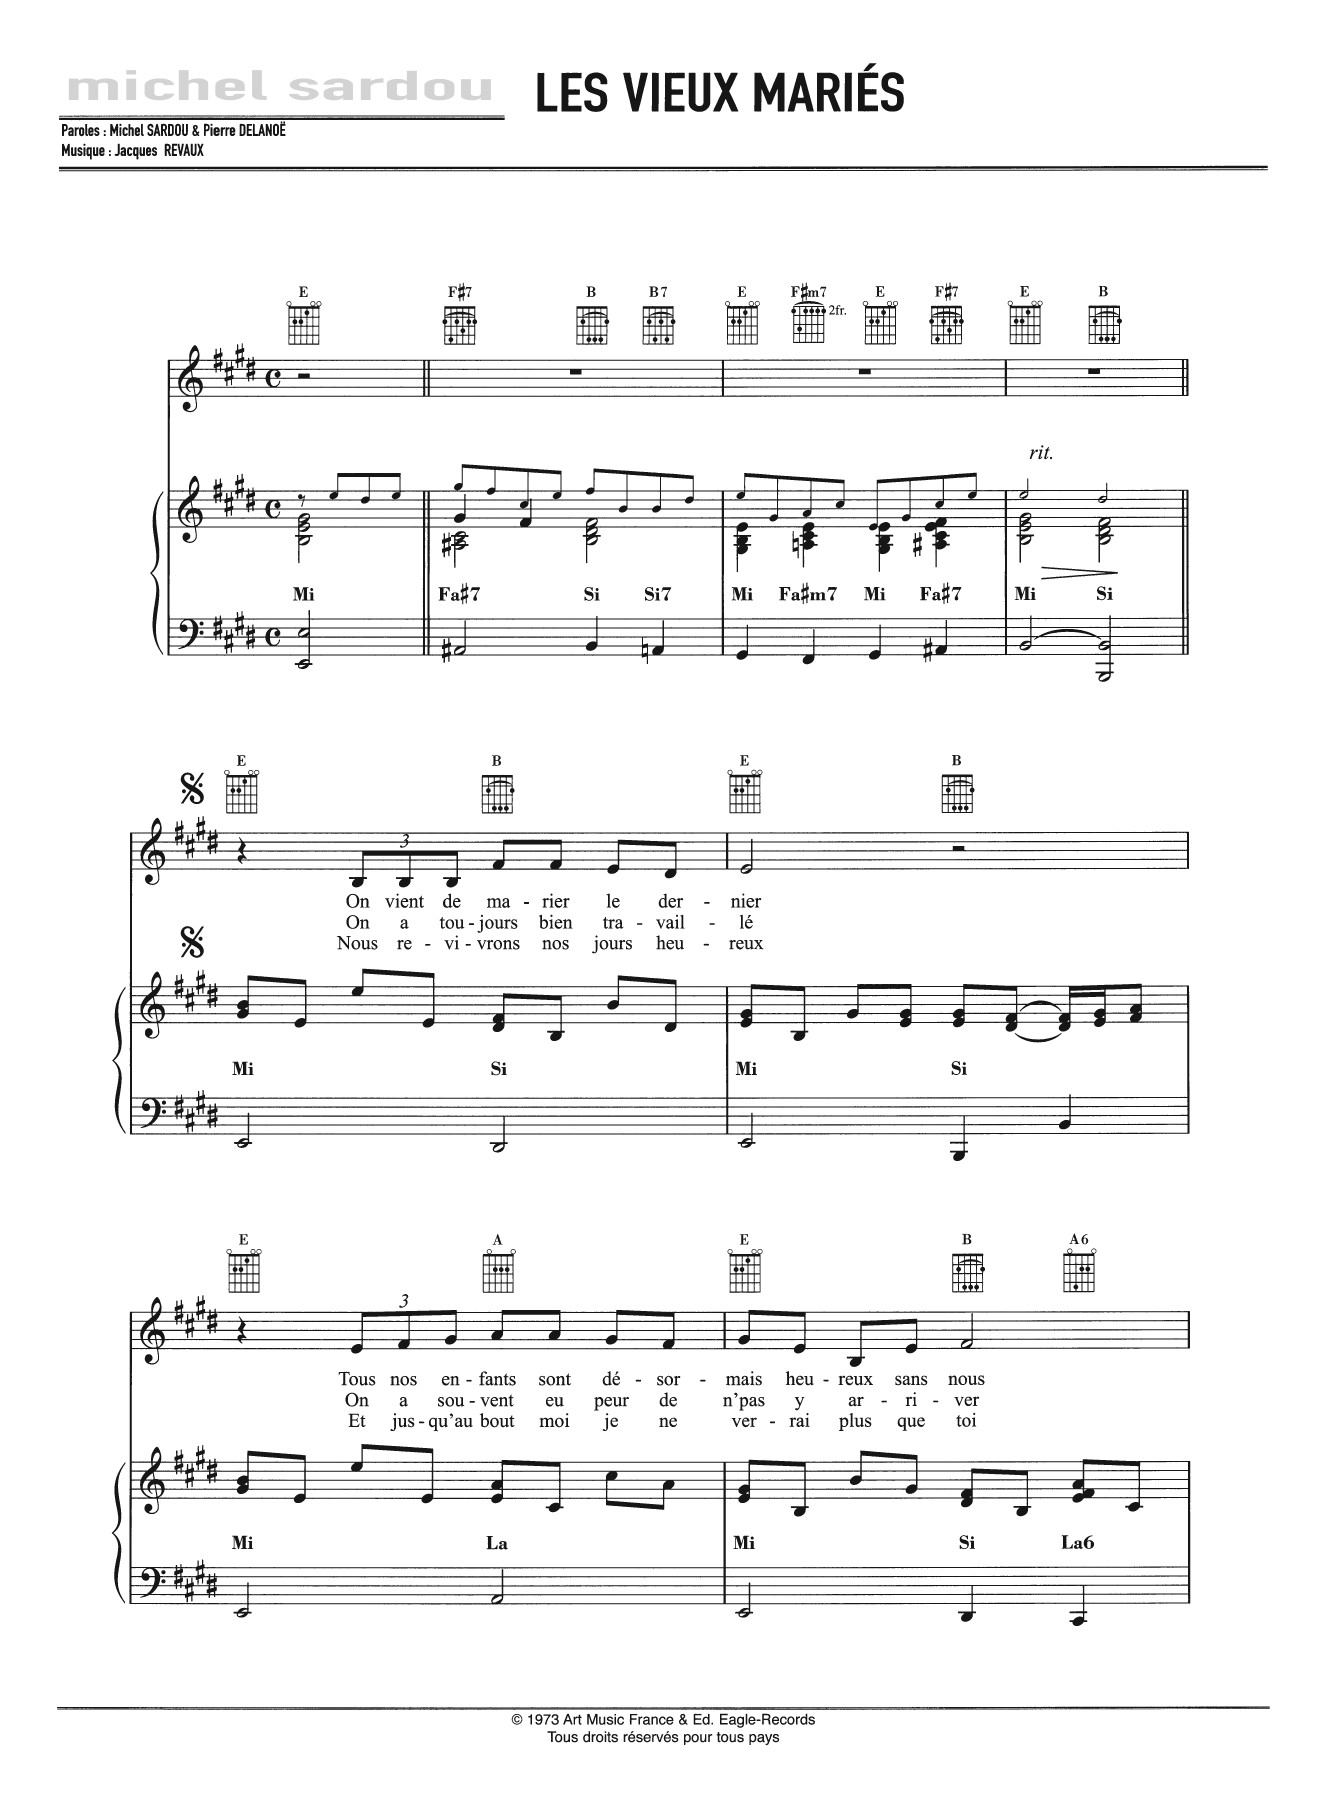 Michel Sardou Les Vieux Maries Sheet Music Notes & Chords for Piano, Vocal & Guitar - Download or Print PDF